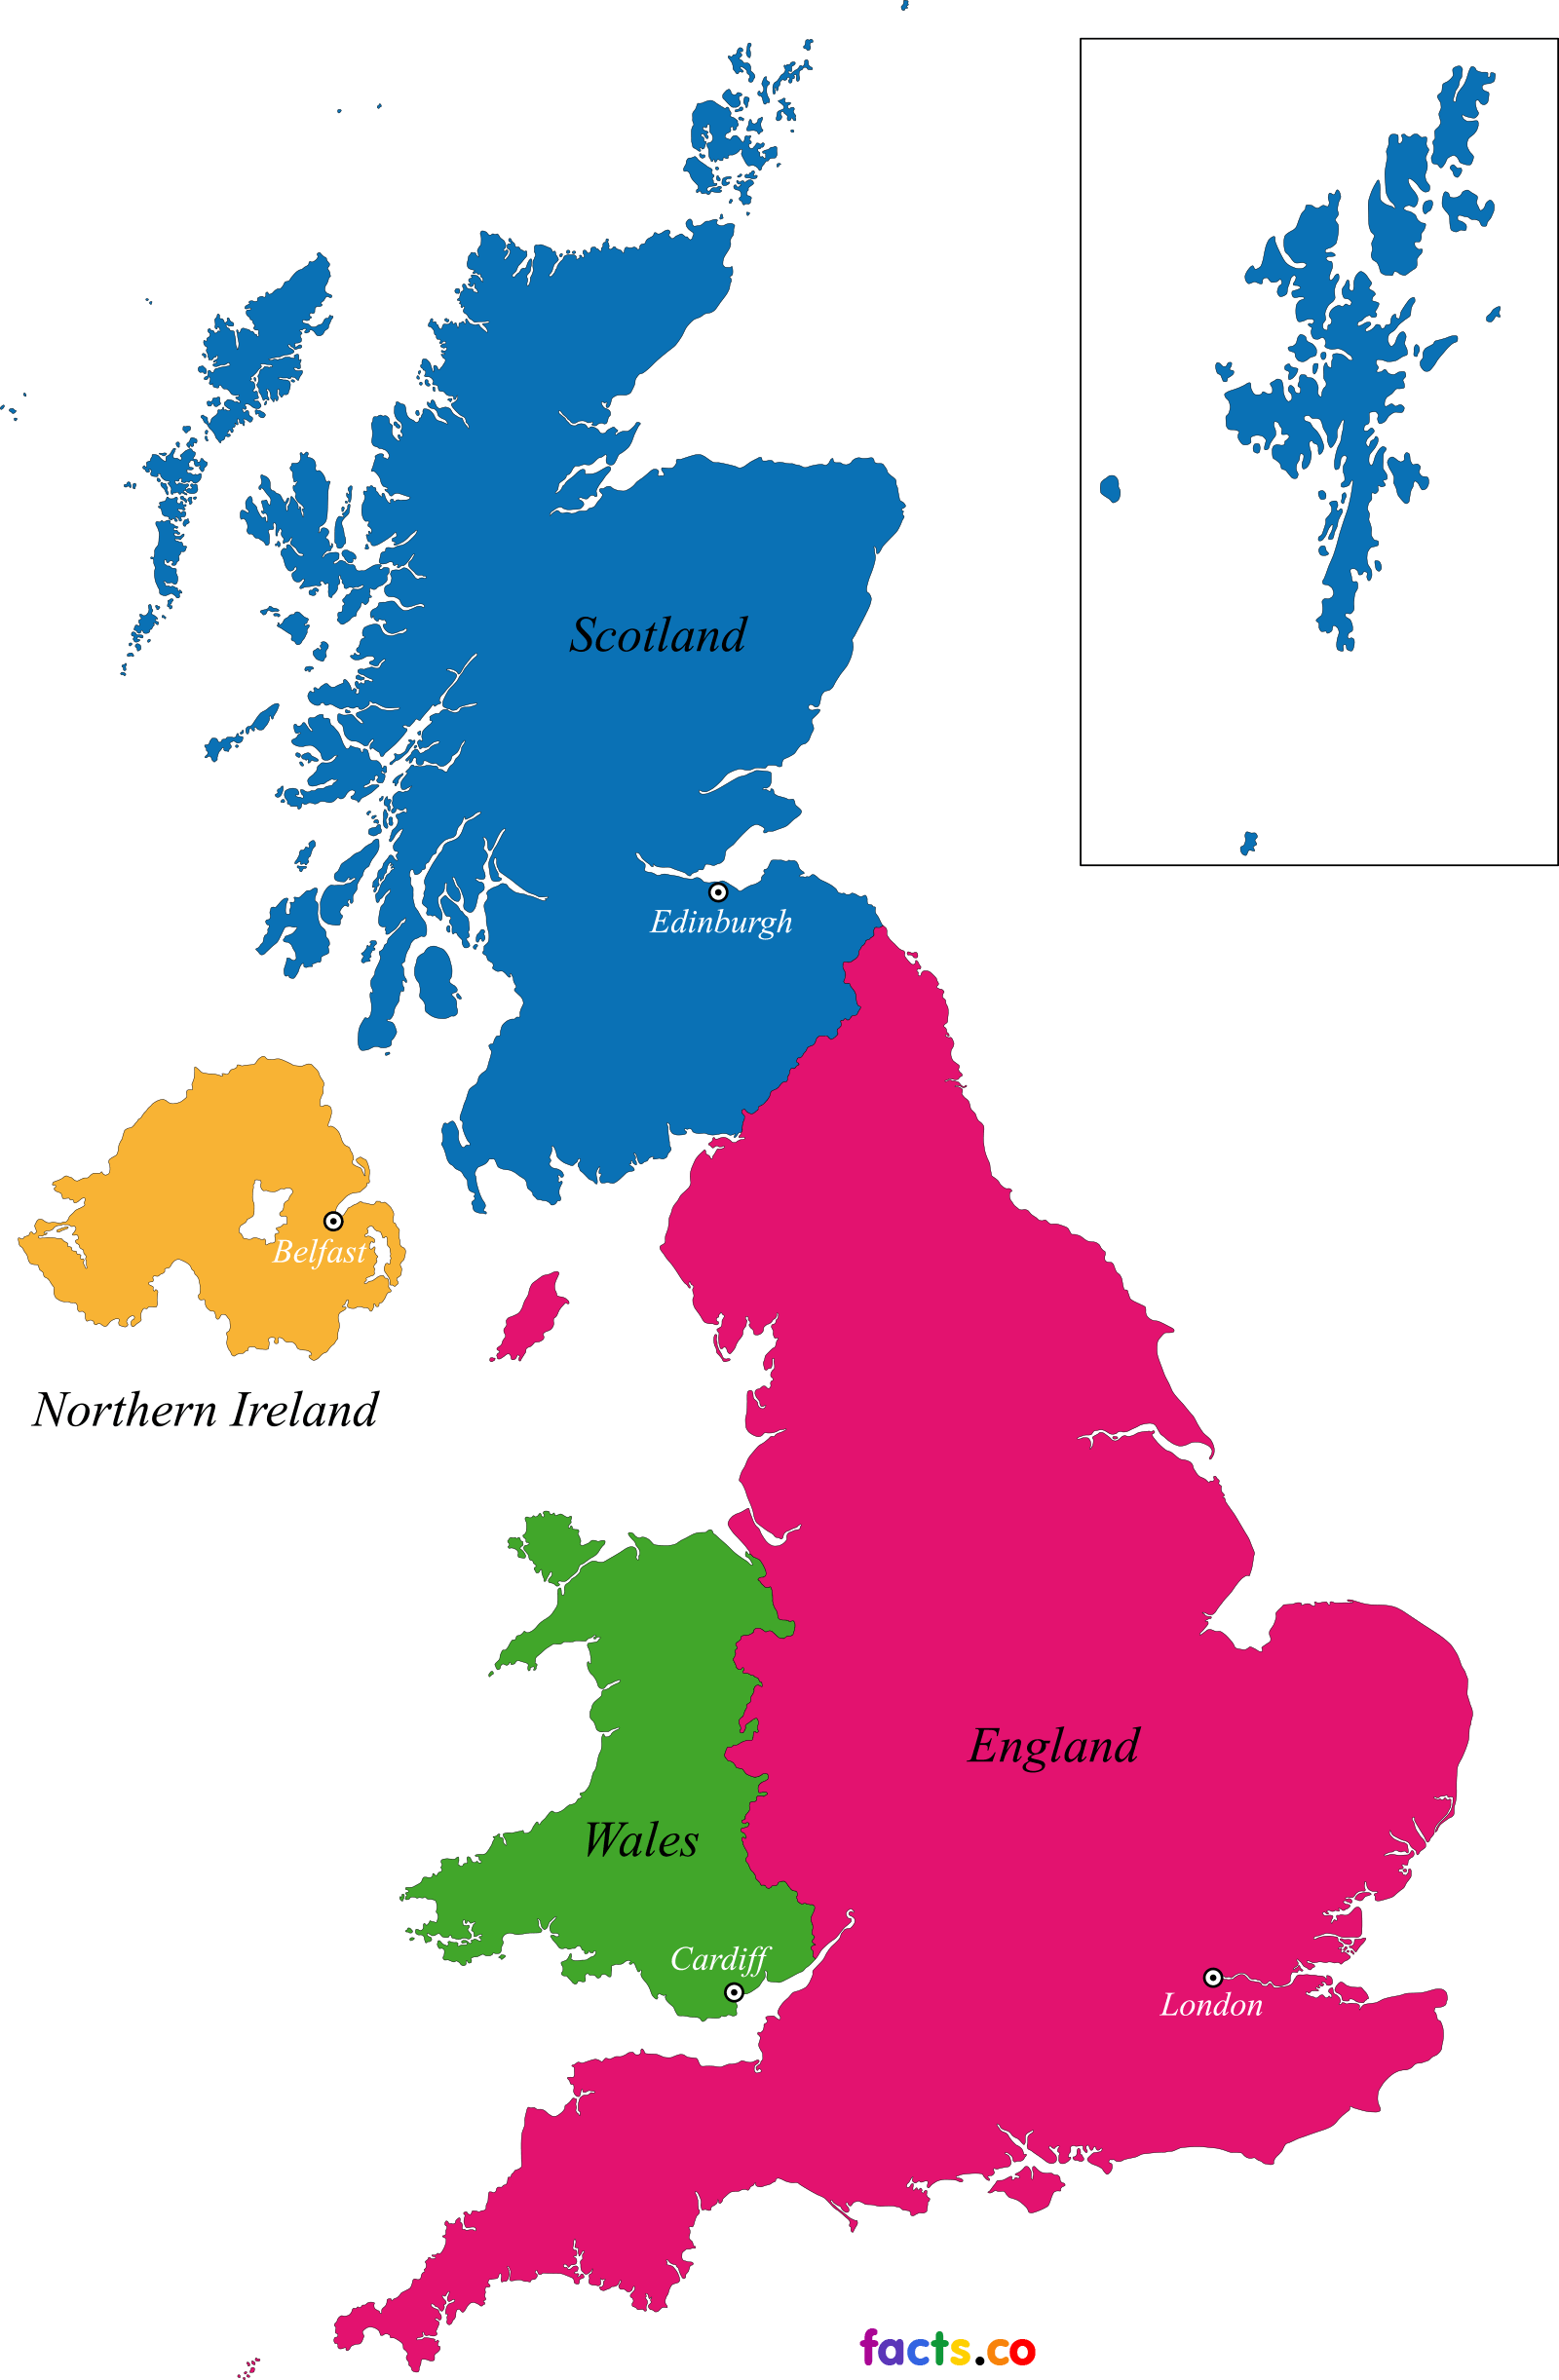 United Kingdom | ConstitutionNet